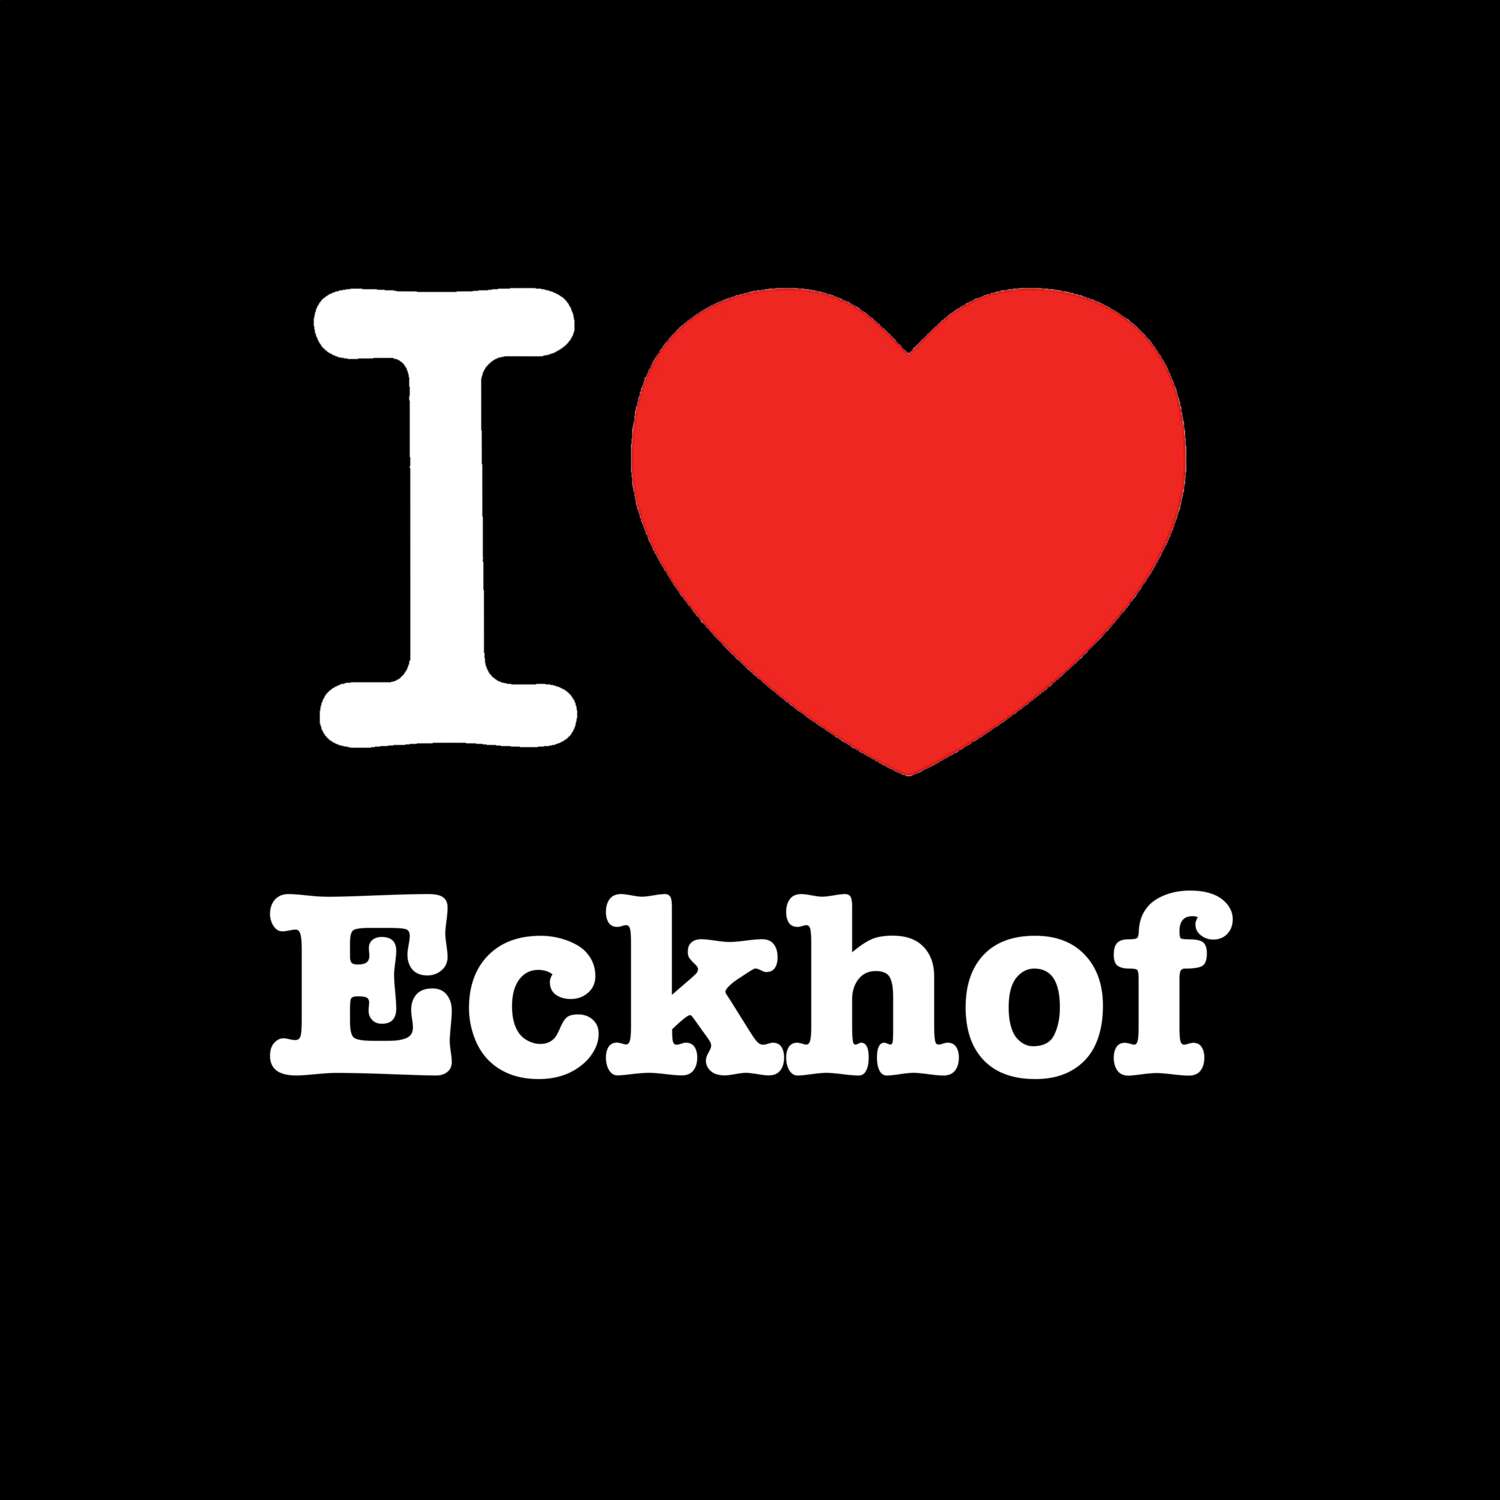 Eckhof T-Shirt »I love«